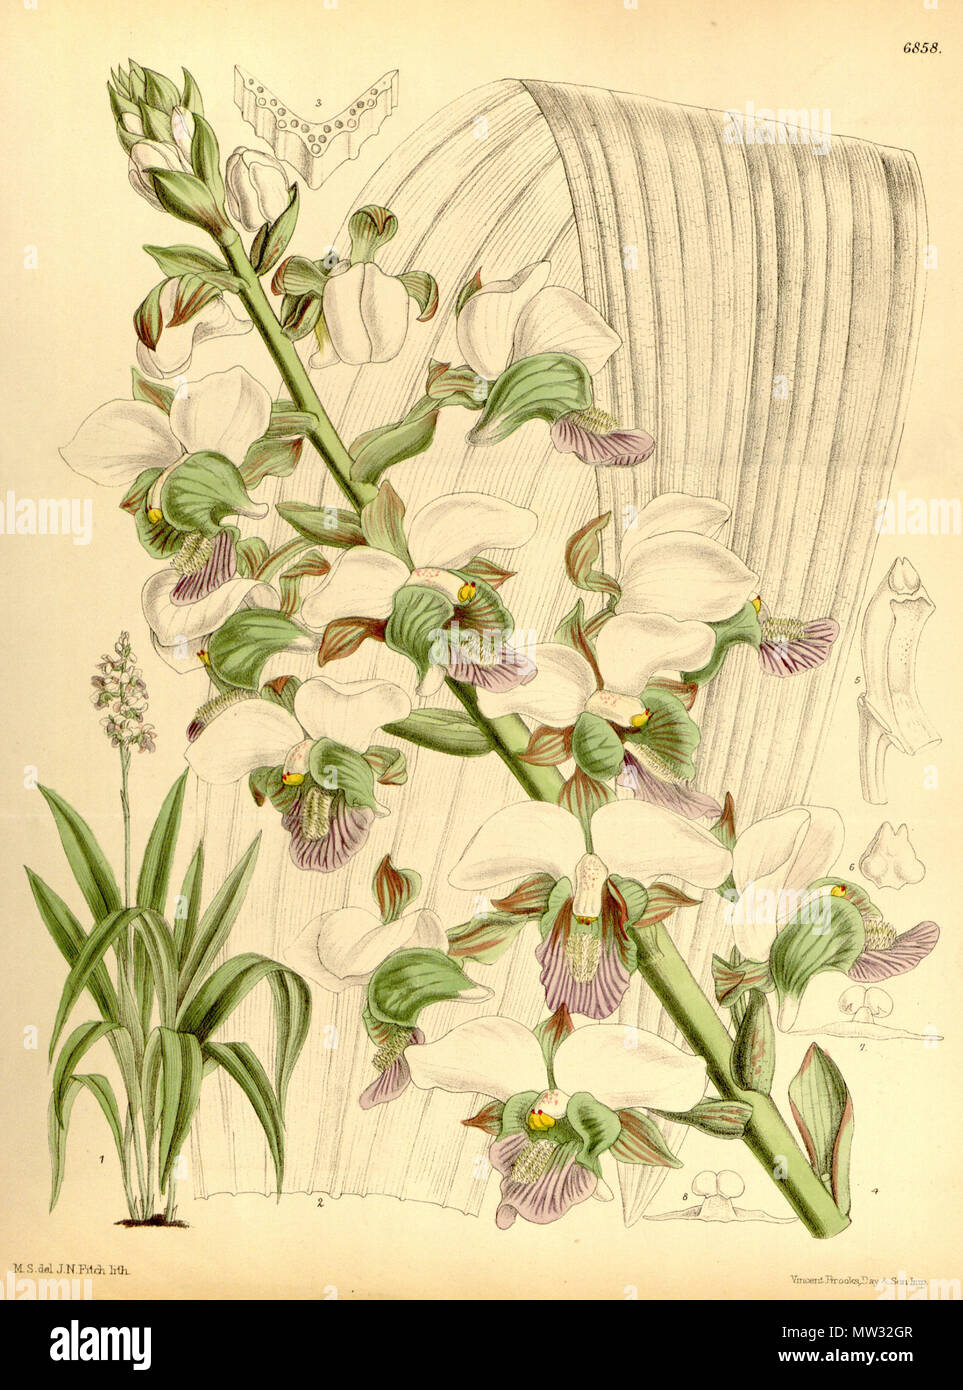 . Illustration of Eulophia rosea (as syn. Lissochilus sandersonii, spelled Lissochilus sandersoni) . 1886. M. S. del. ( = Matilda Smith, 1854-1926), J. N. Fitch lith. ( = John Nugent Fitch, 1840–1927) . Description by Joseph Dalton Hooker (1817—1911) 198 Eulophia rosea (as Lissochilus sandersonii) - Curtis' 112 (Ser. 3 no. 42) pl. 6858 (1886) Stock Photo